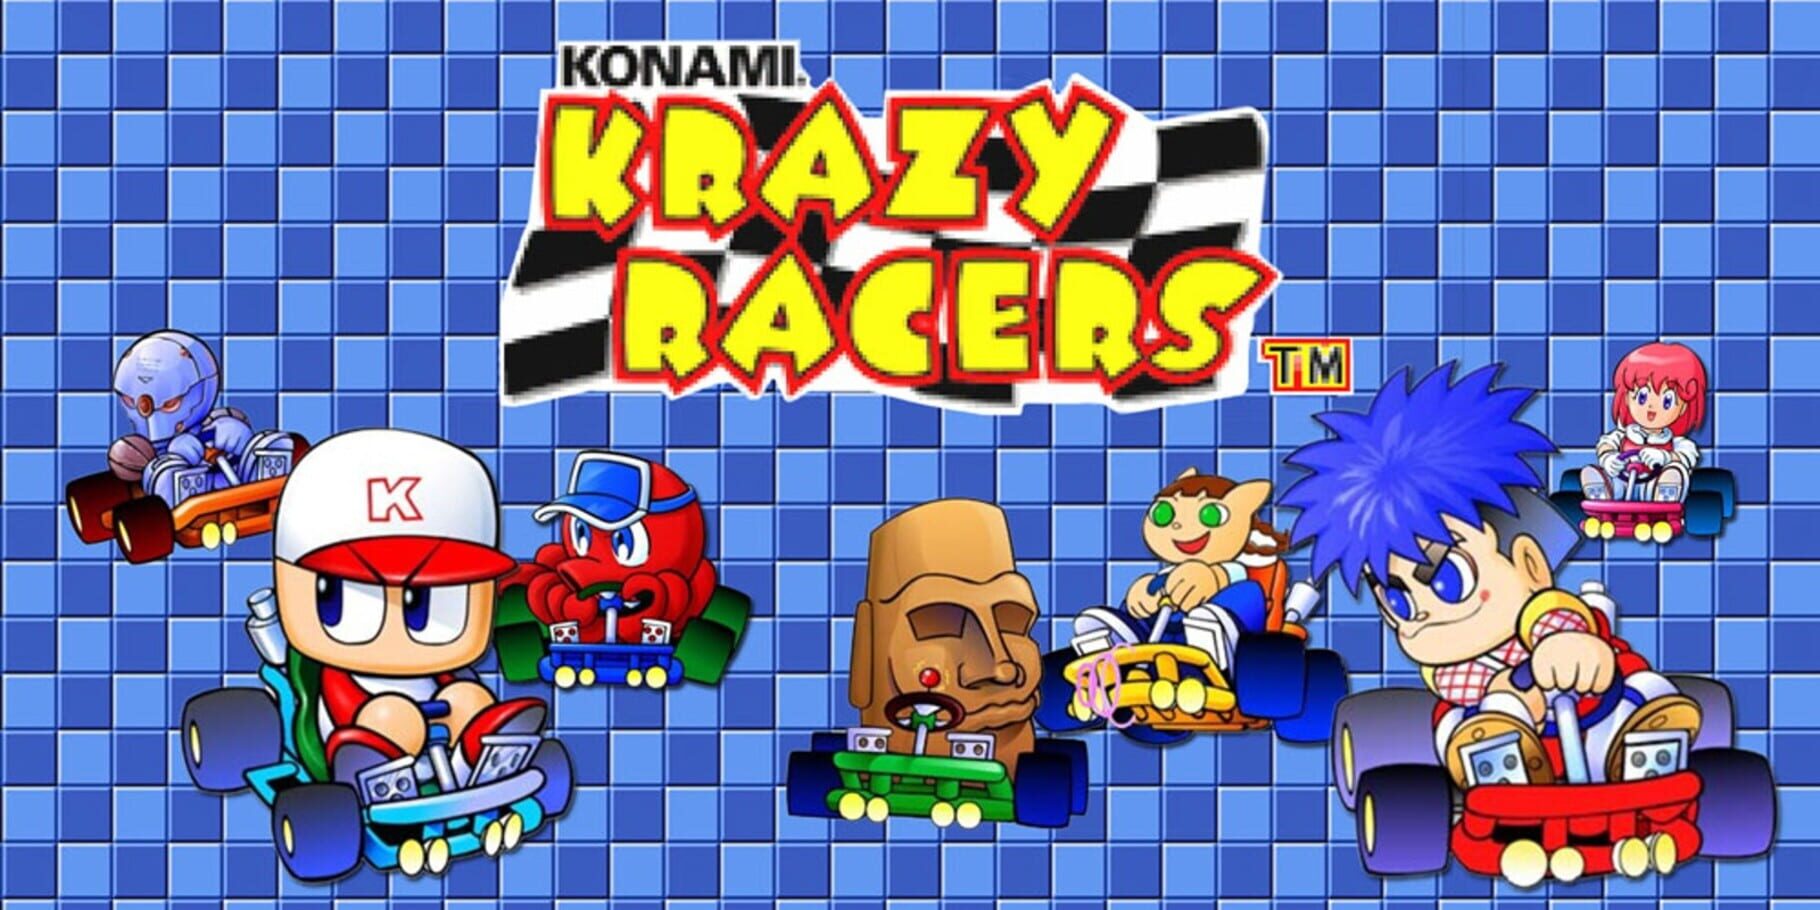 Arte - Konami Krazy Racers